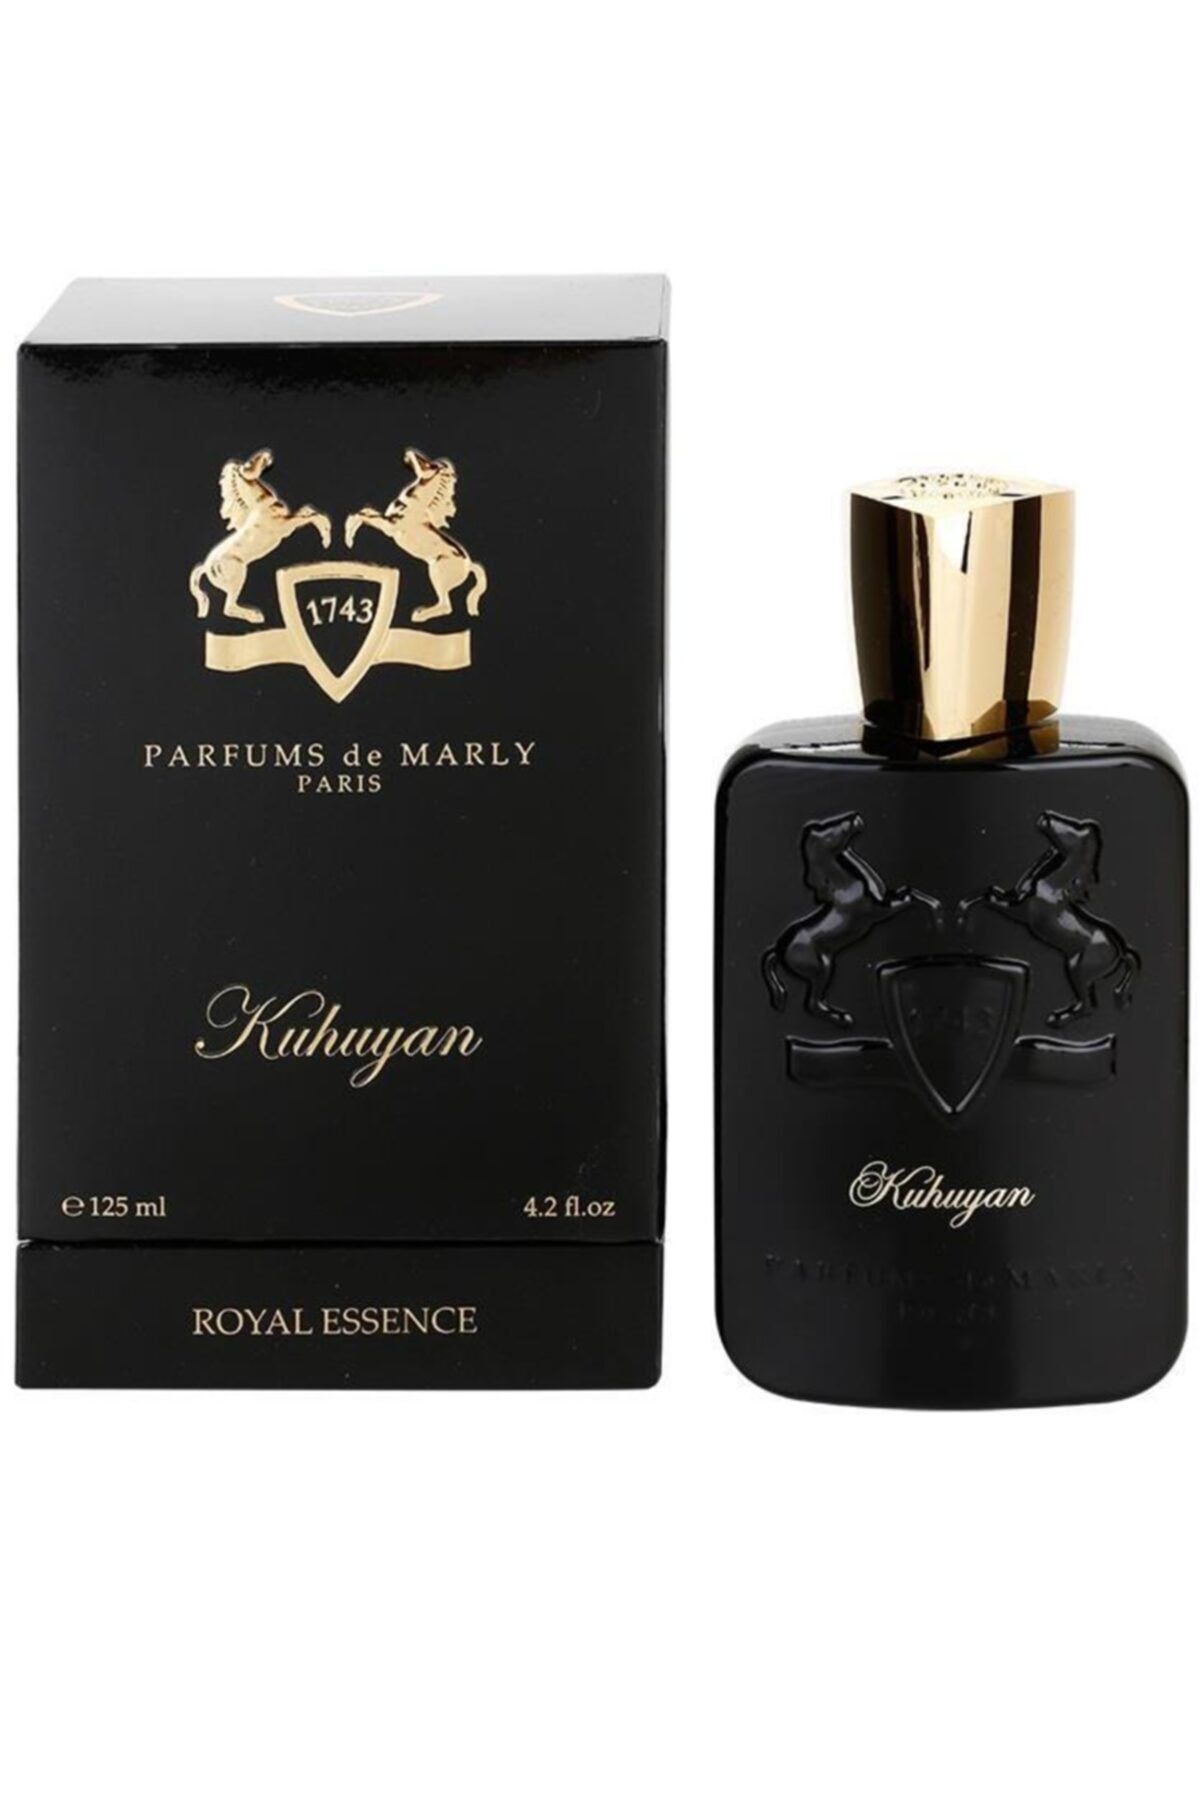 Royal essence. Oajan Marly. Parfums de Marly магазин. Духи 1743 мужские. De Marly духи.